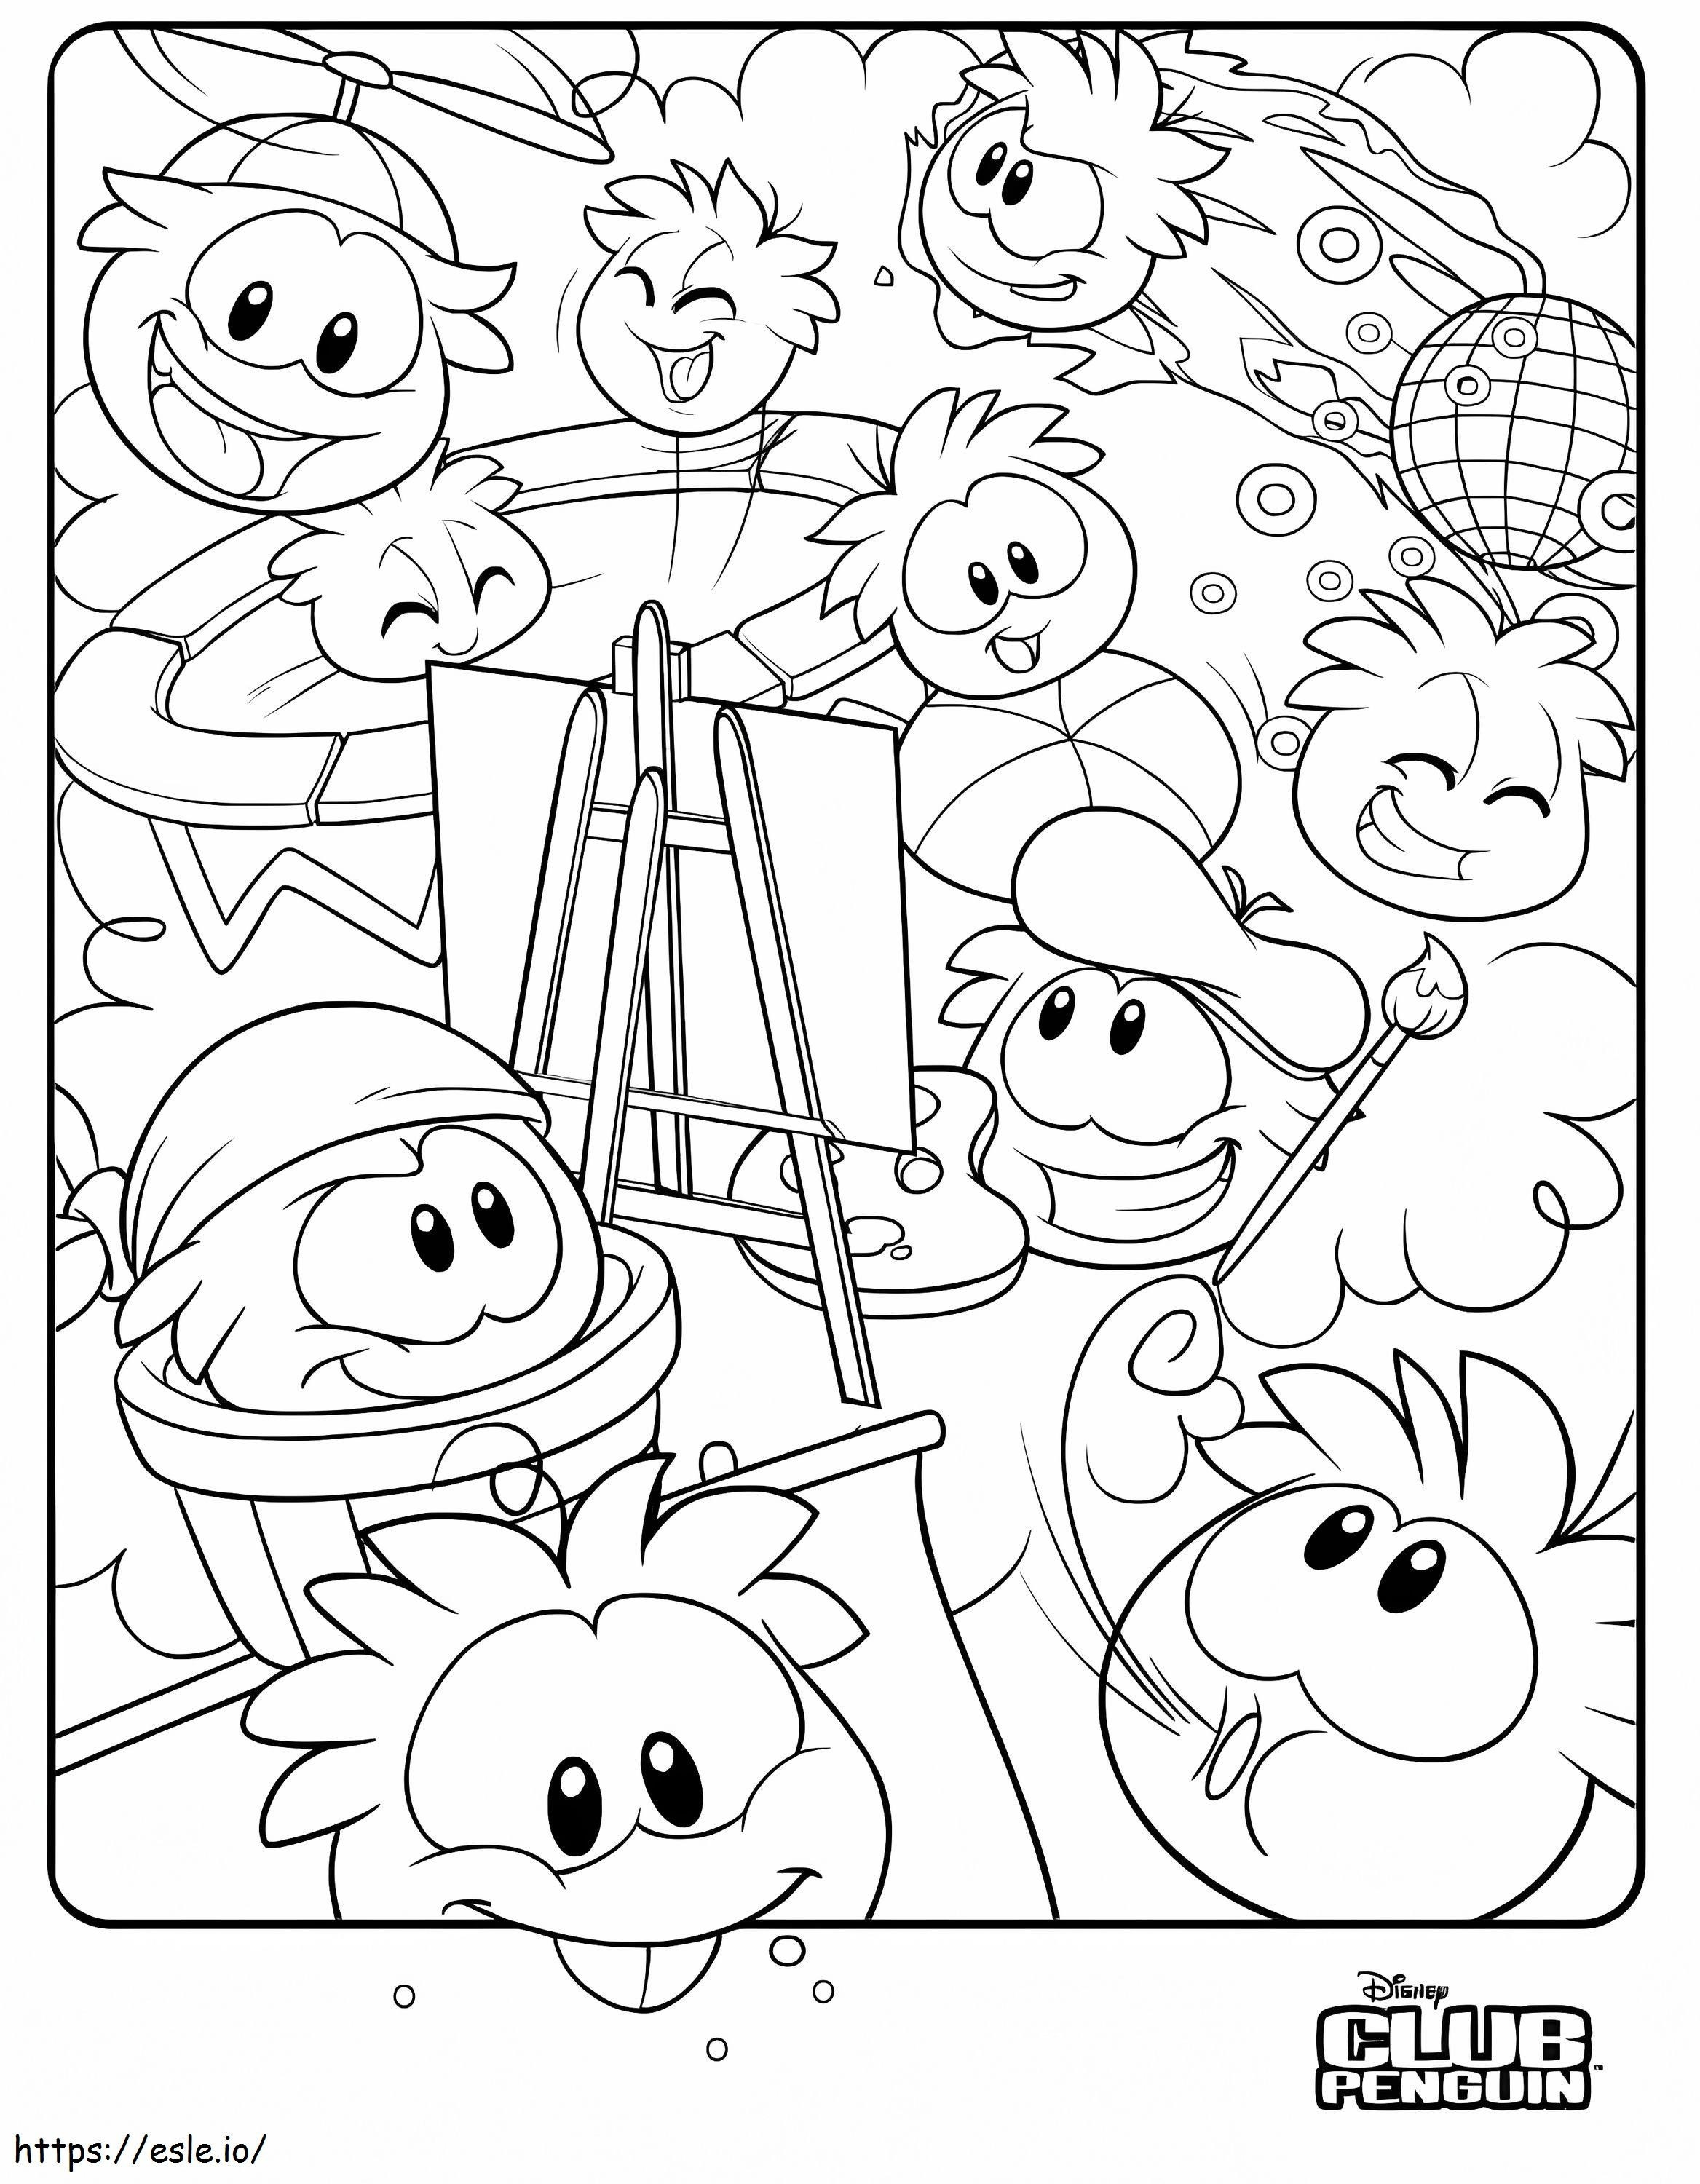 Coloriage Puffles Club Penguin à imprimer dessin